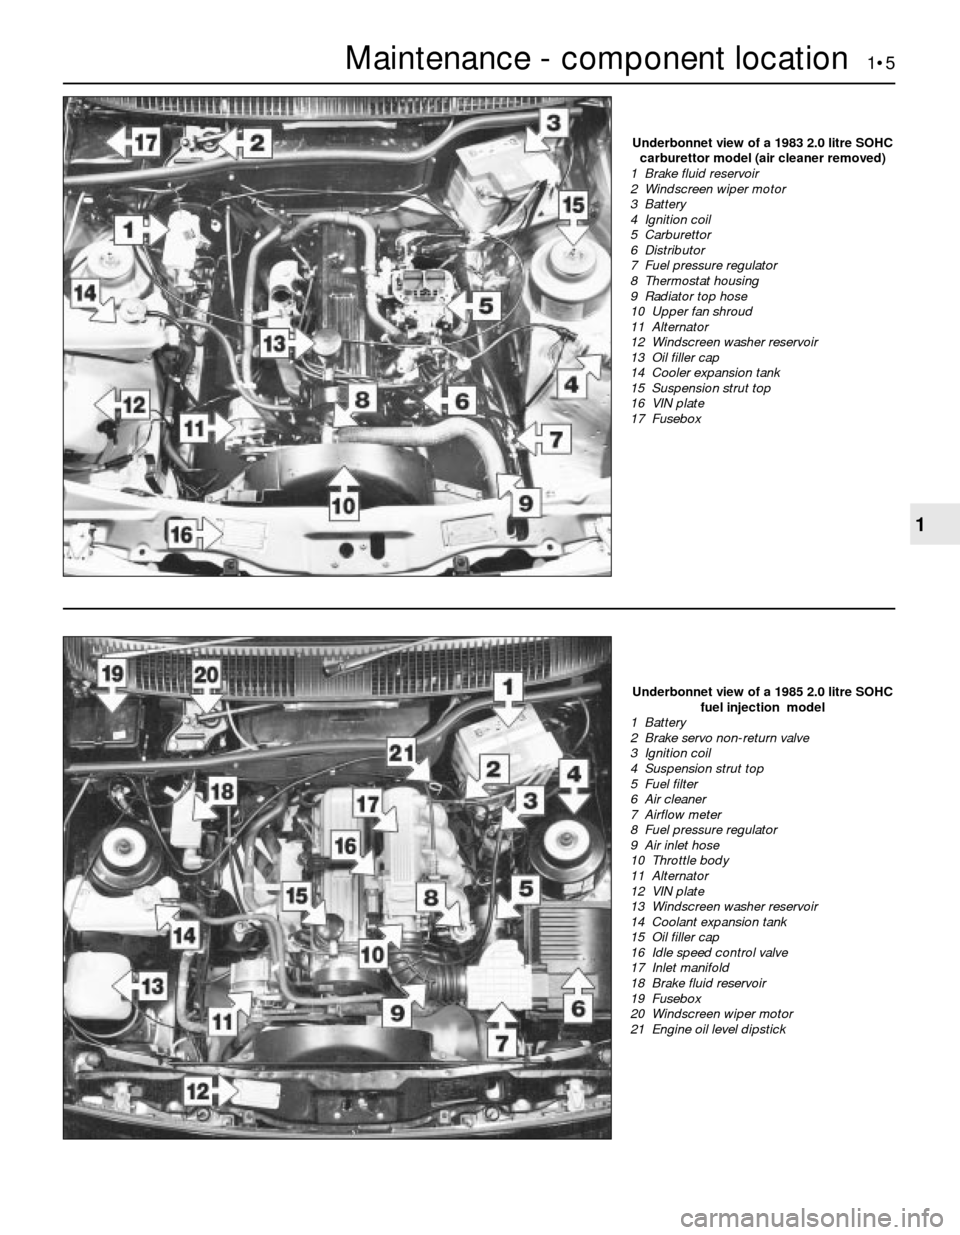 FORD SIERRA 1985 1.G Routine Manintenance And Servicing Workshop Manual Maintenance - component location  1•5
1
Underbonnet view of a 1985 2.0 litre SOHC
fuel injection  model
1  Battery
2  Brake servo non-return valve
3  Ignition coil
4  Suspension strut top
5  Fuel fi